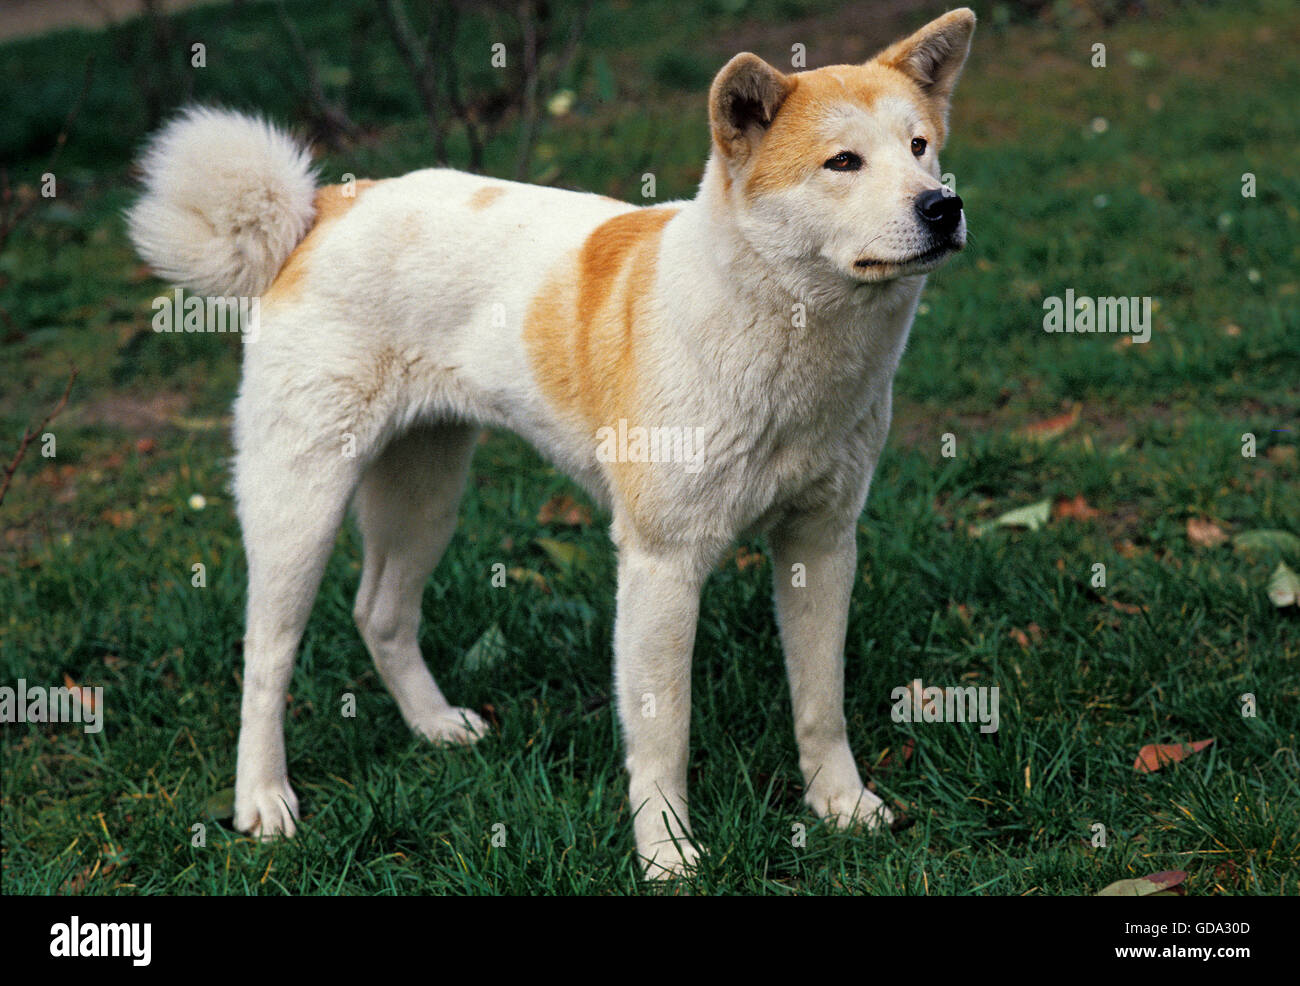 AKITA INU DOG, ADULT ON GRASS Stock Photo